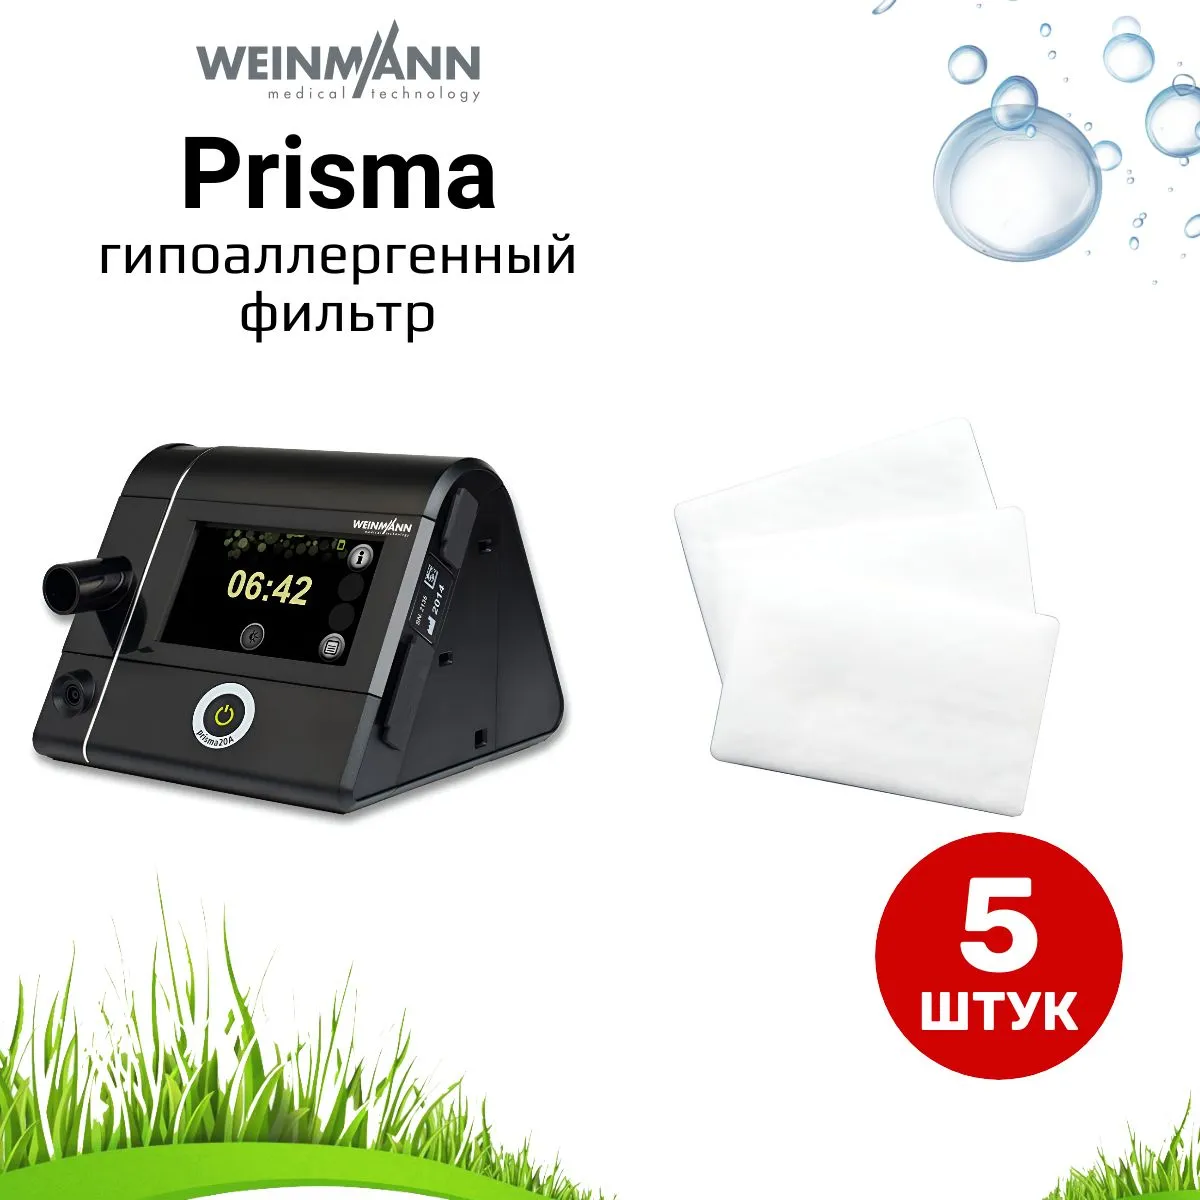 Weinmann Prisma гипоаллергенный фильтр (5 штук) для сипап